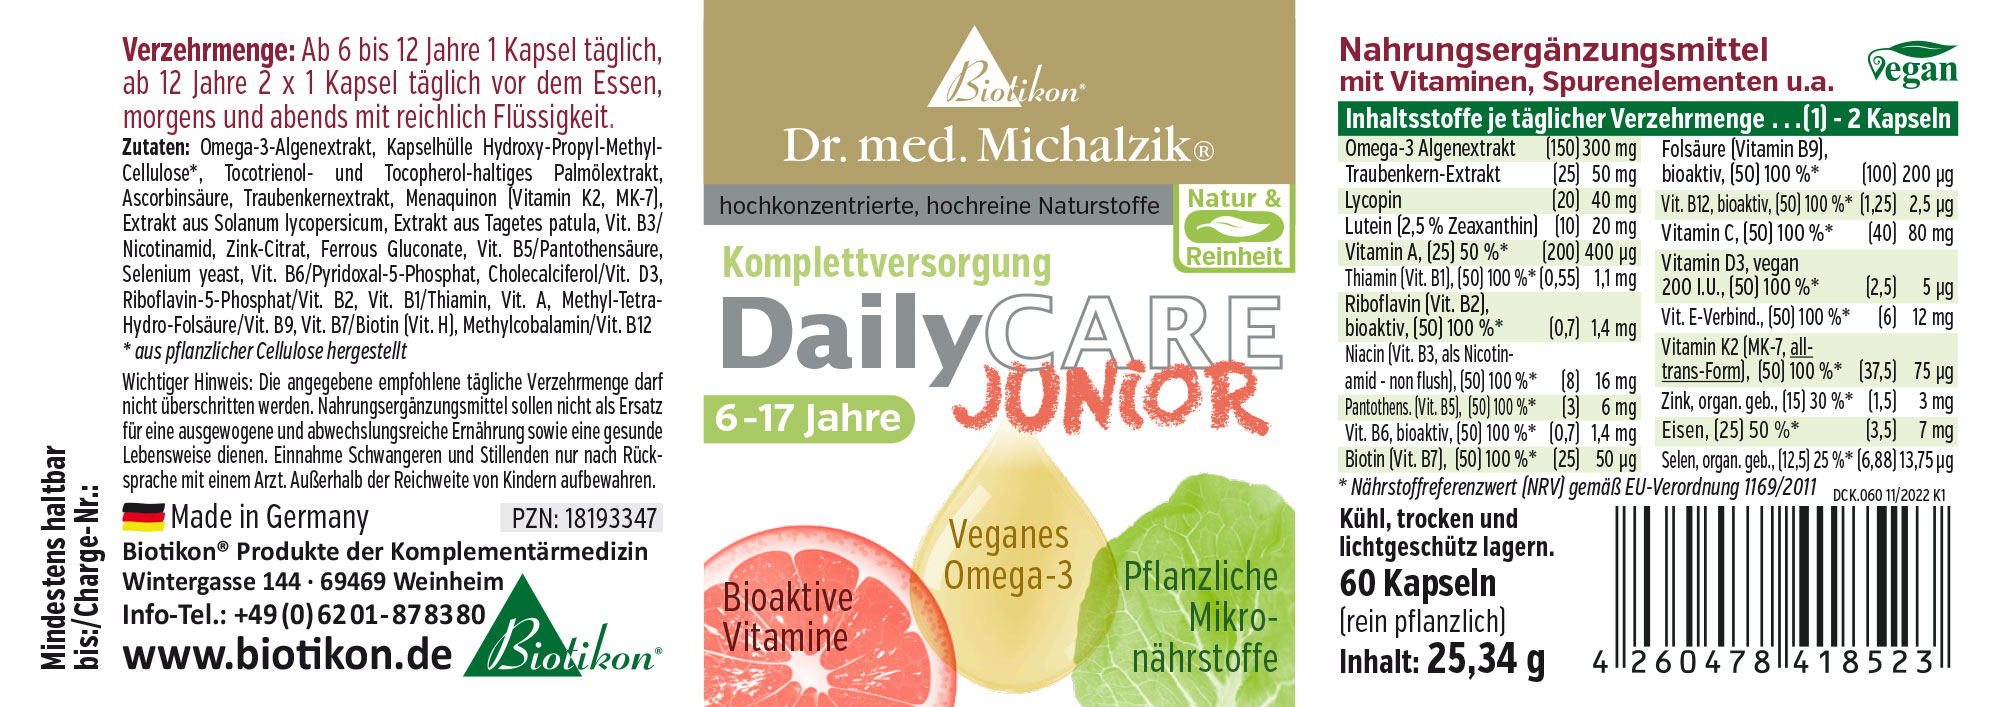 DailyCare Junior nach Dr. med. Michalzik